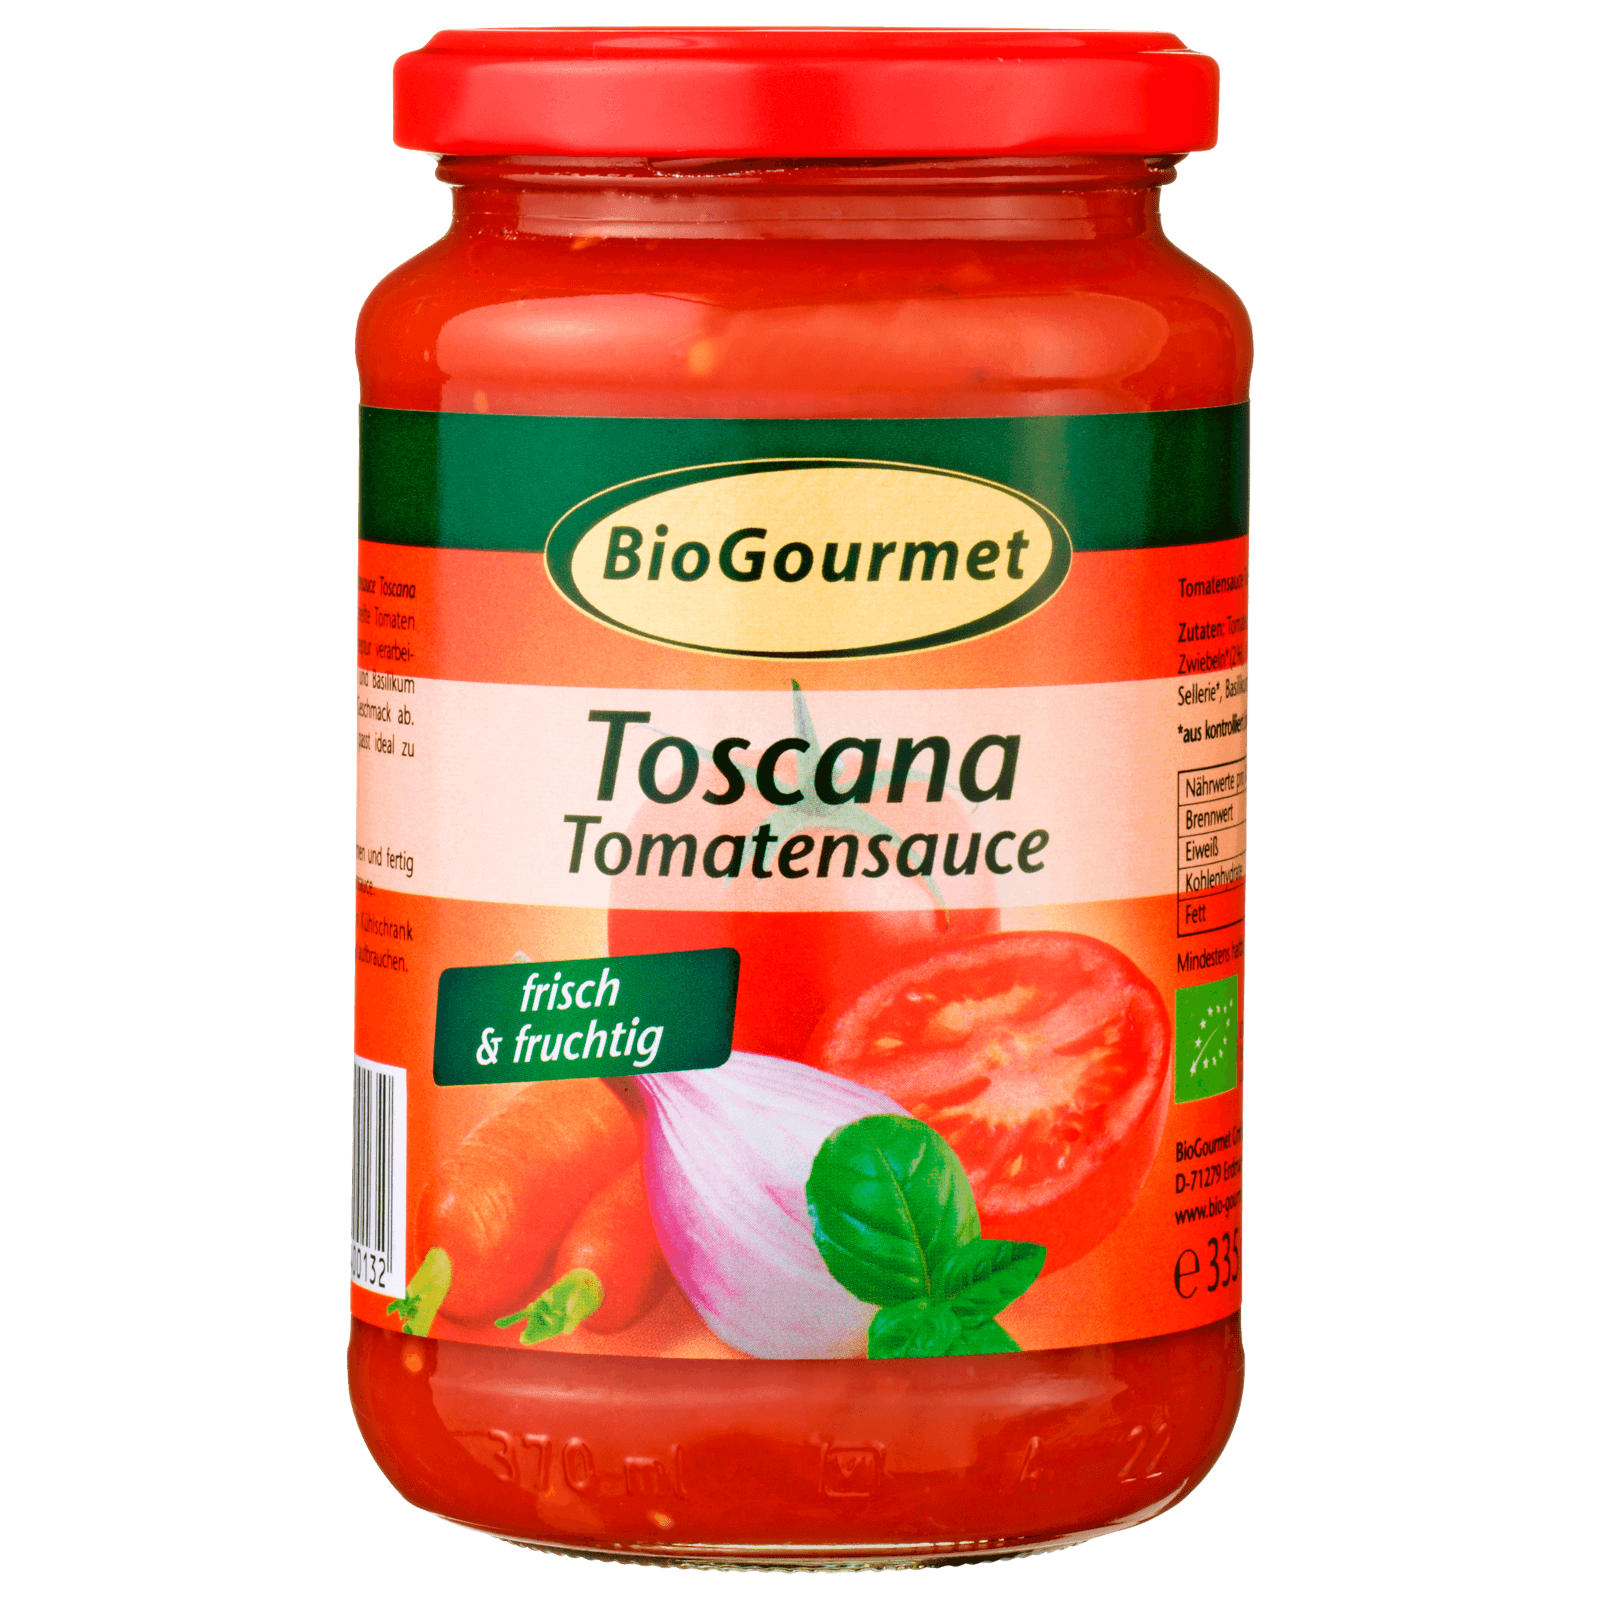 BioGourmet Tomatensauce Toscana 340g bei REWE online bestellen!